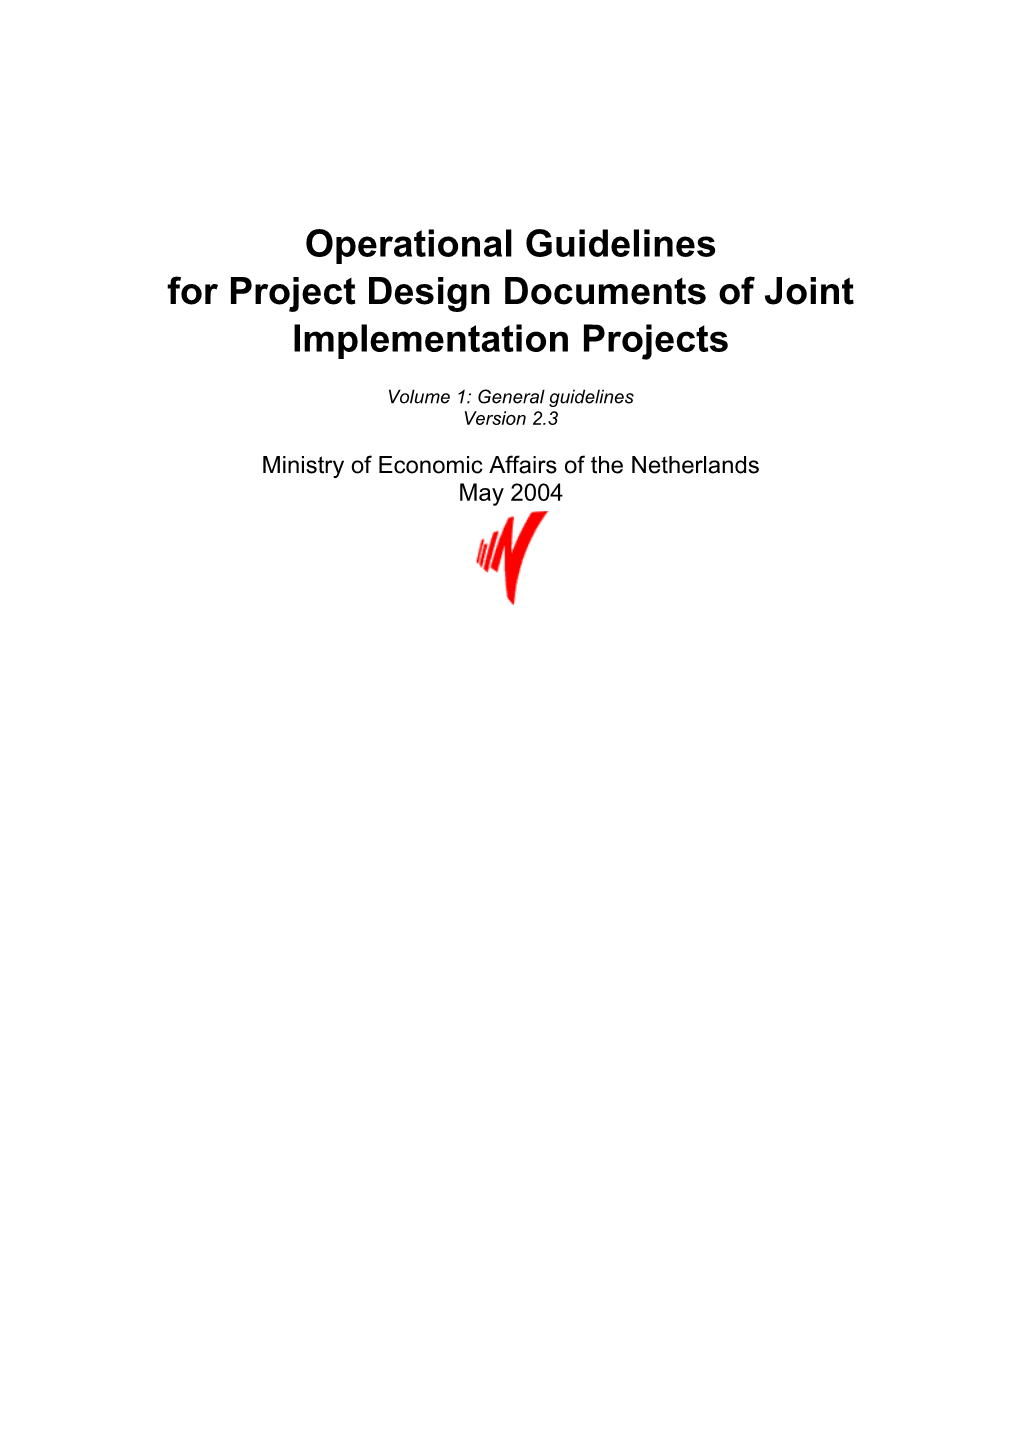 JI Guidelines Vol1 Senternovem